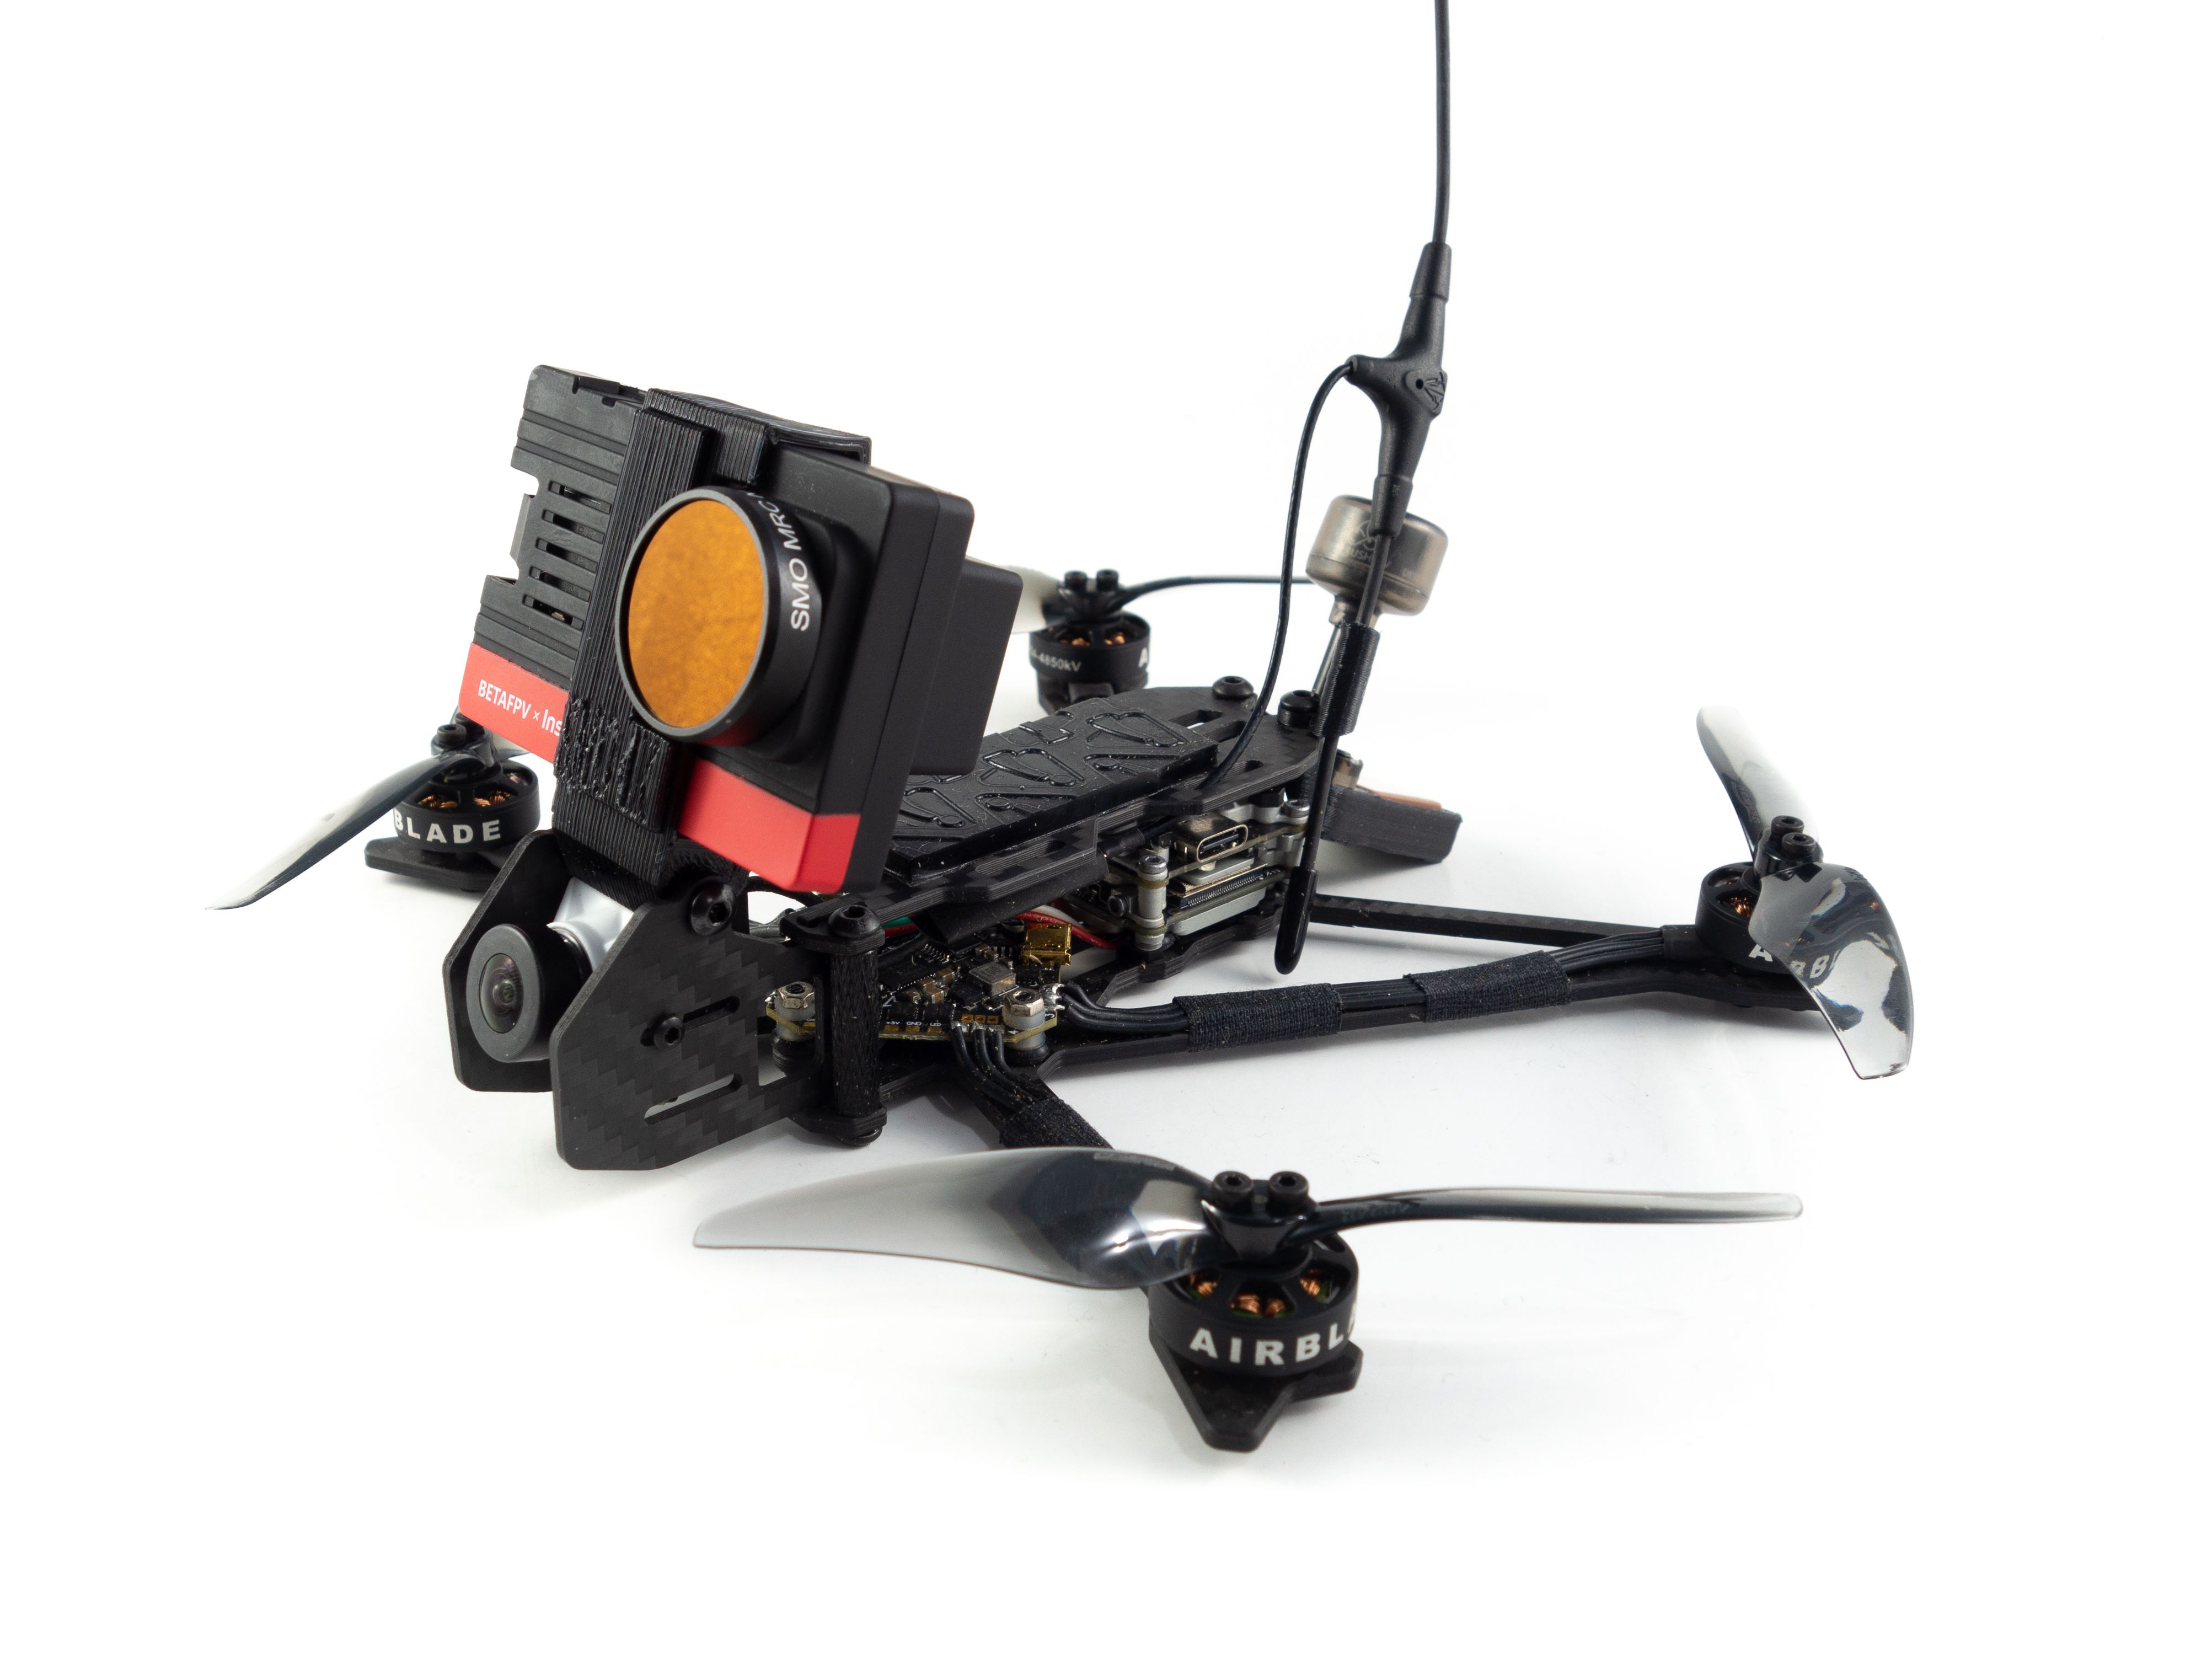 Complete Arrow 3 FPV Drone TPU Body Kit